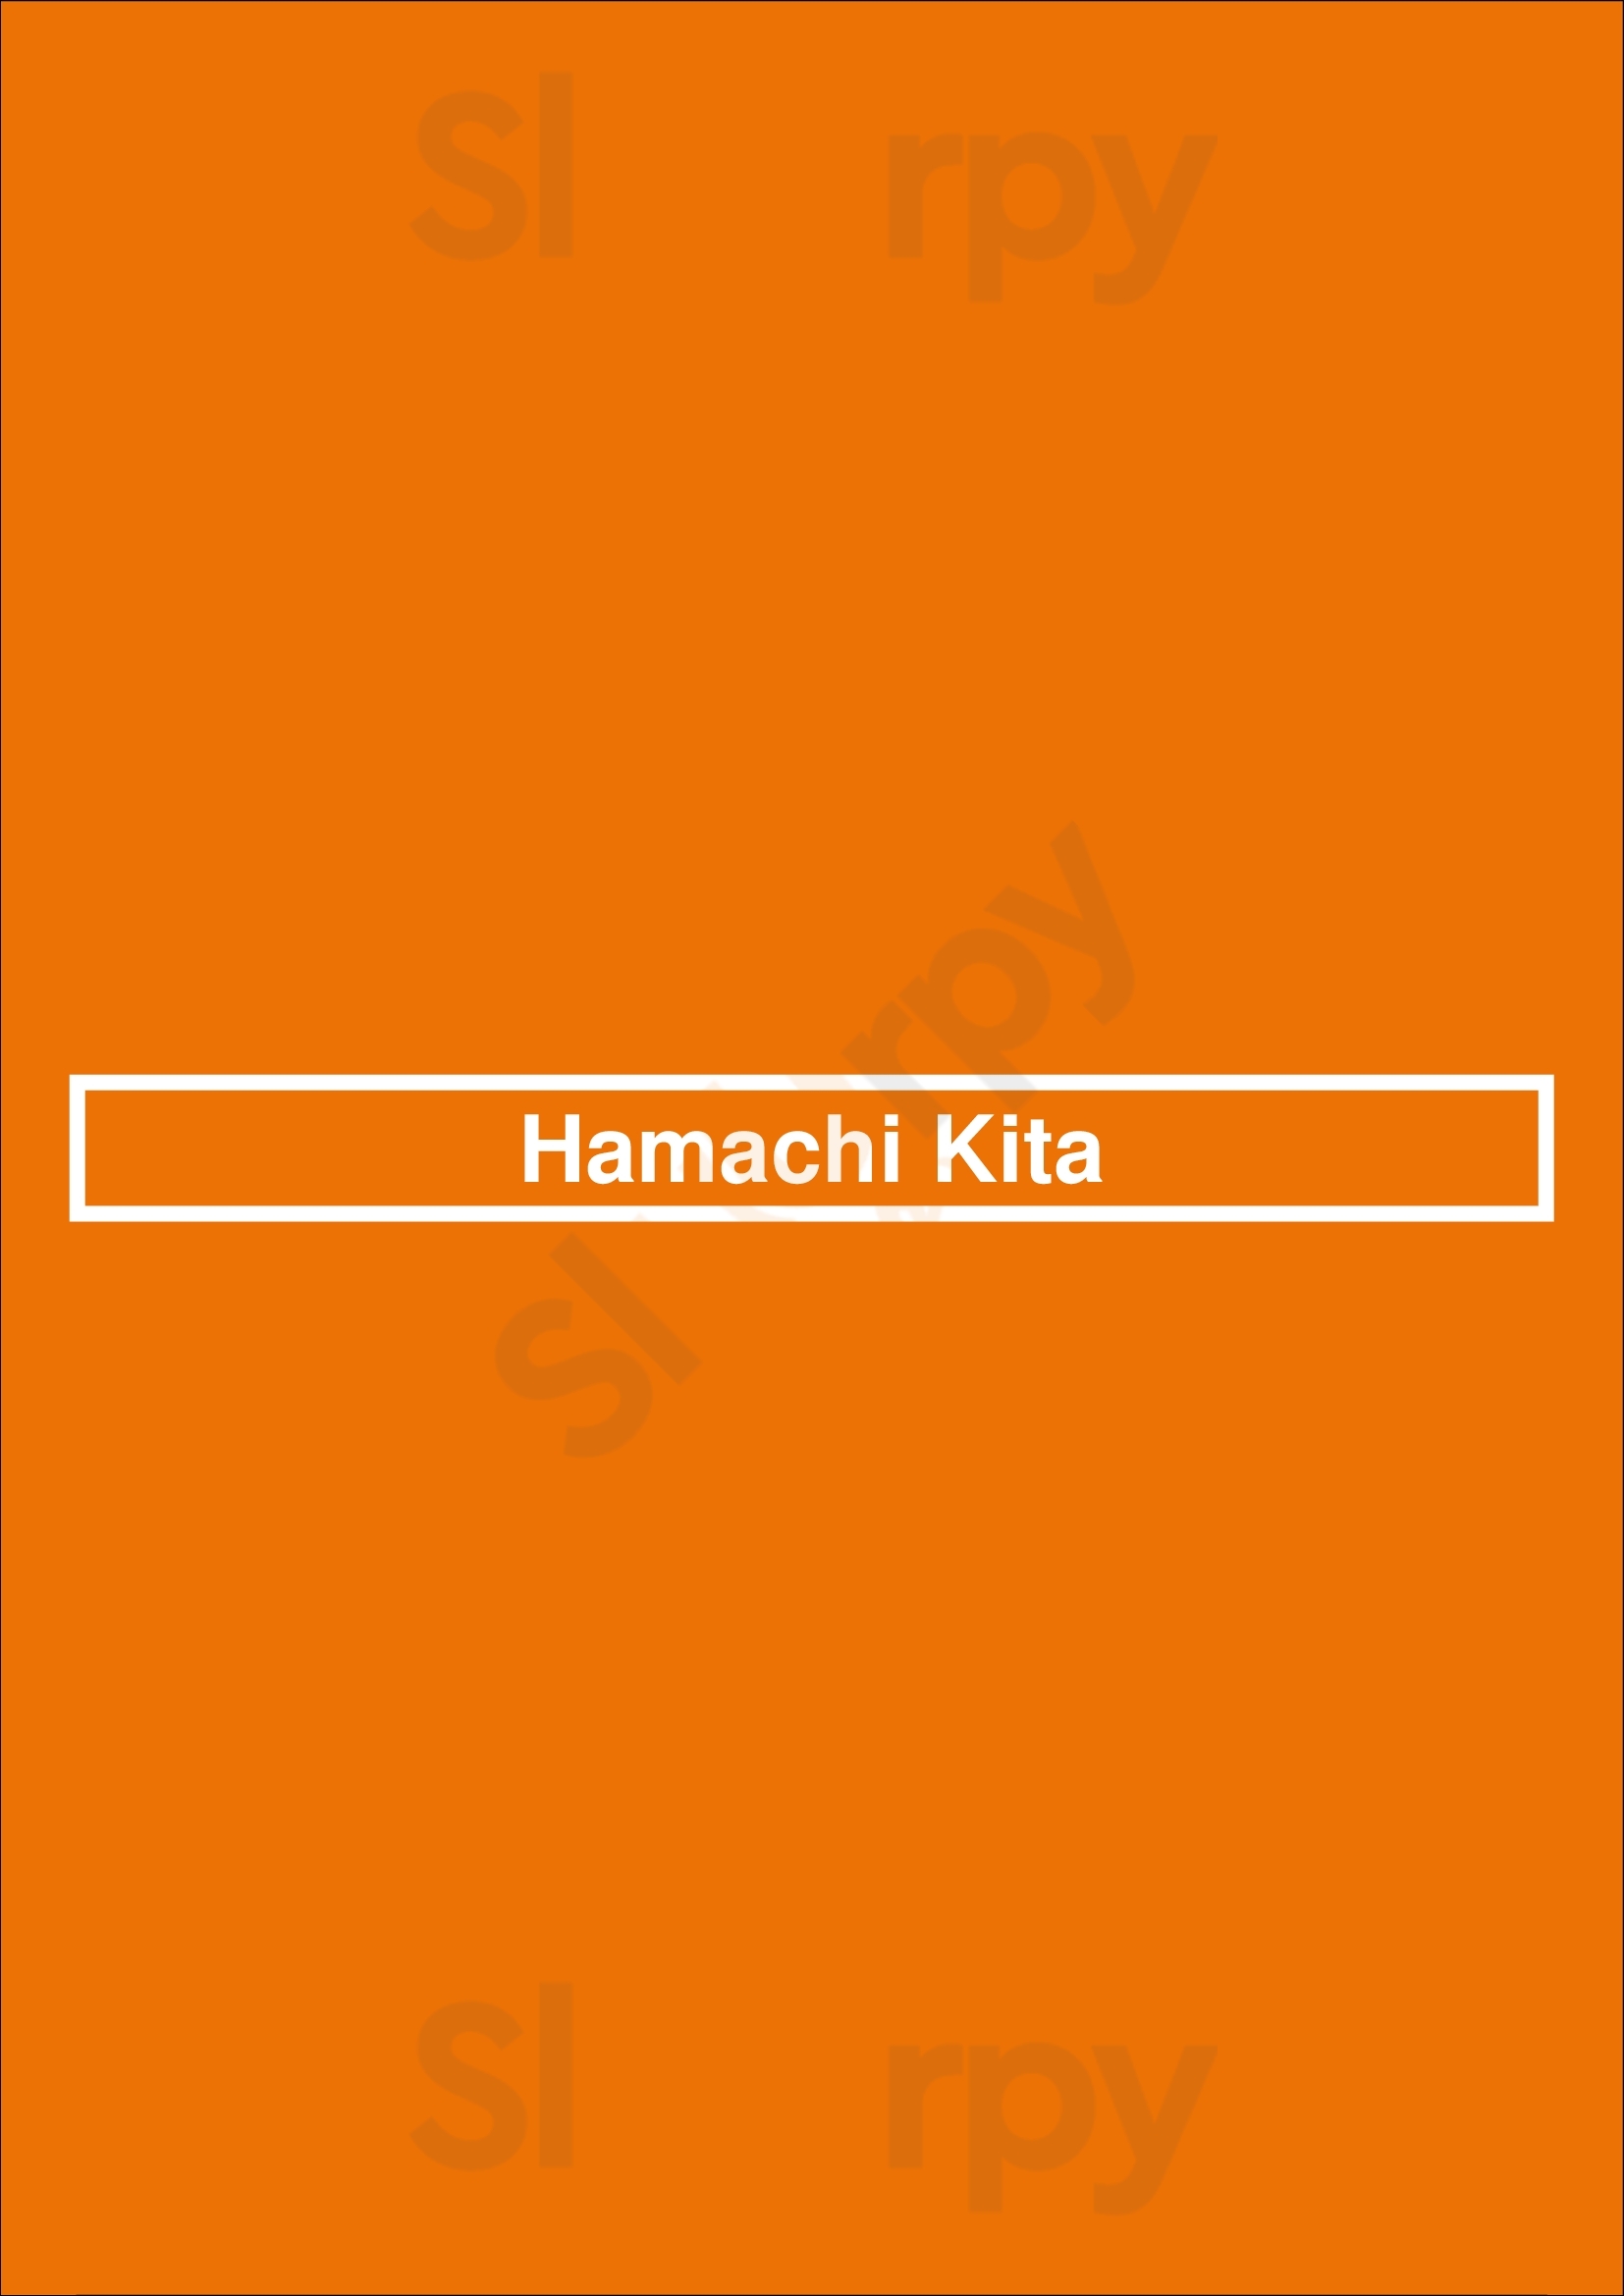 Hamachi Kita Halifax Menu - 1